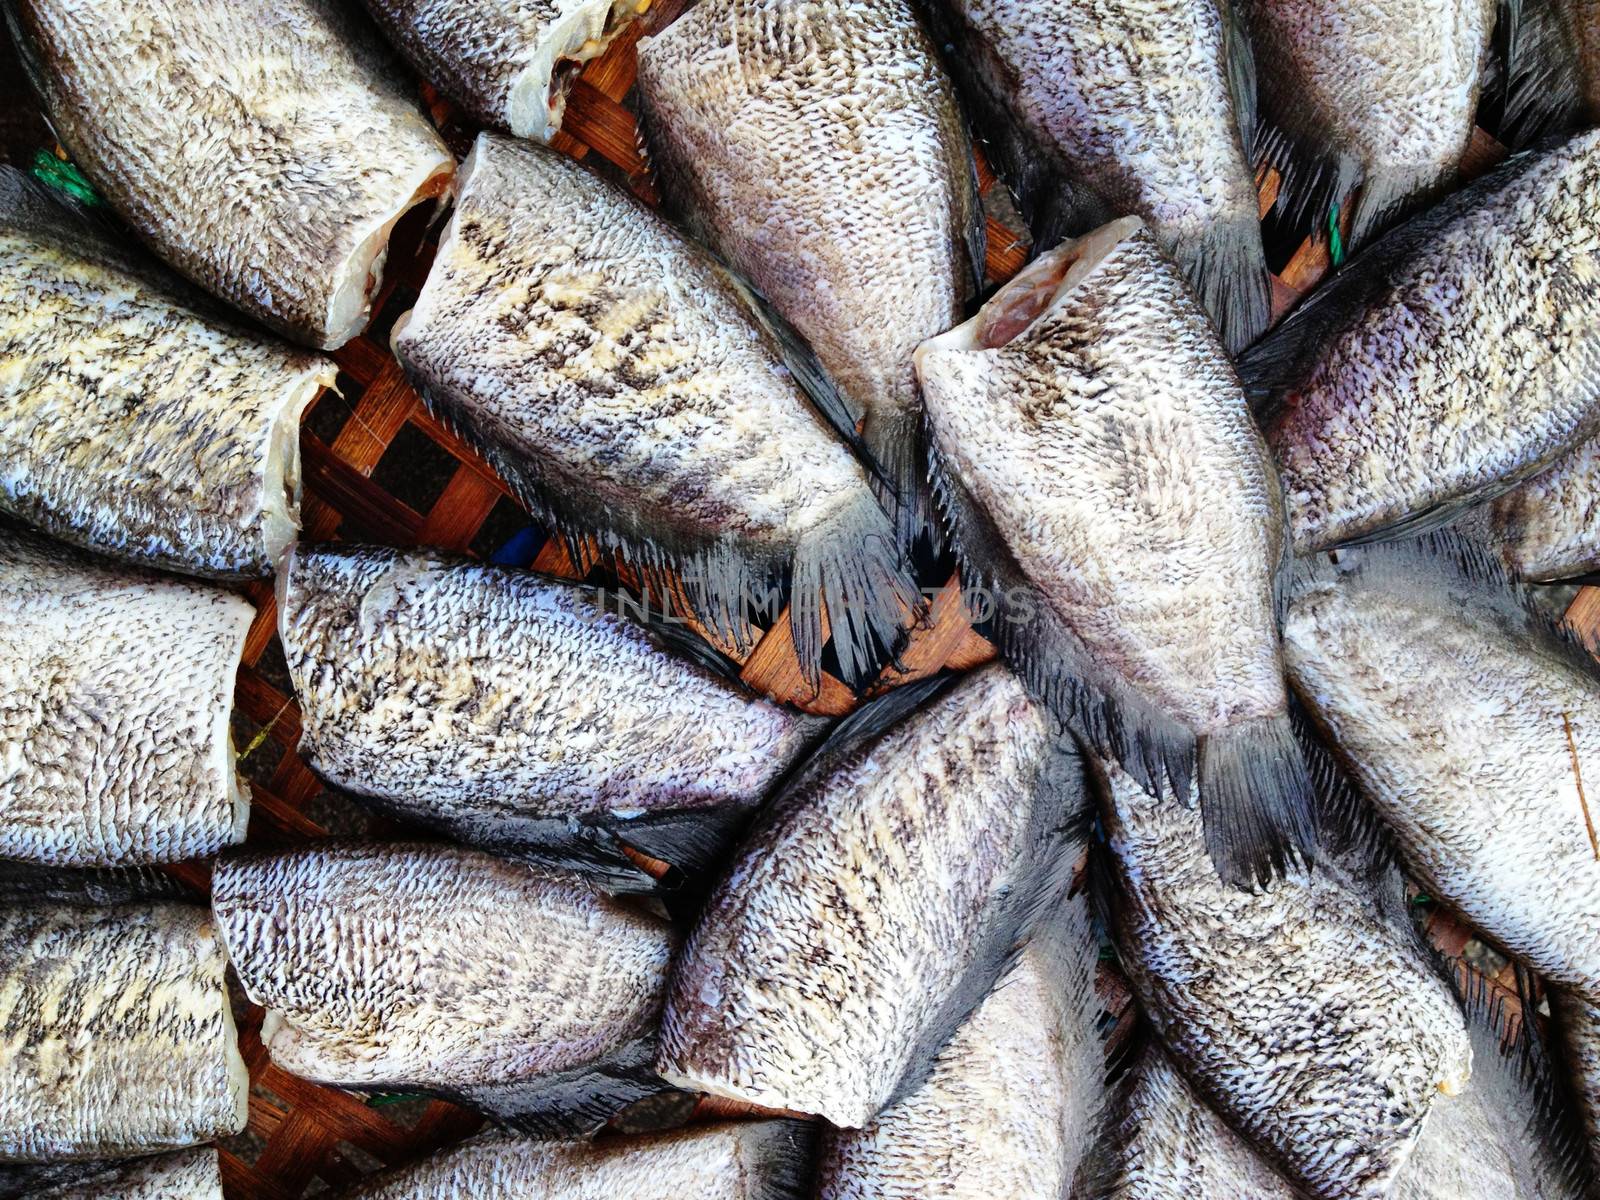 drying snakeskin gourami fishes